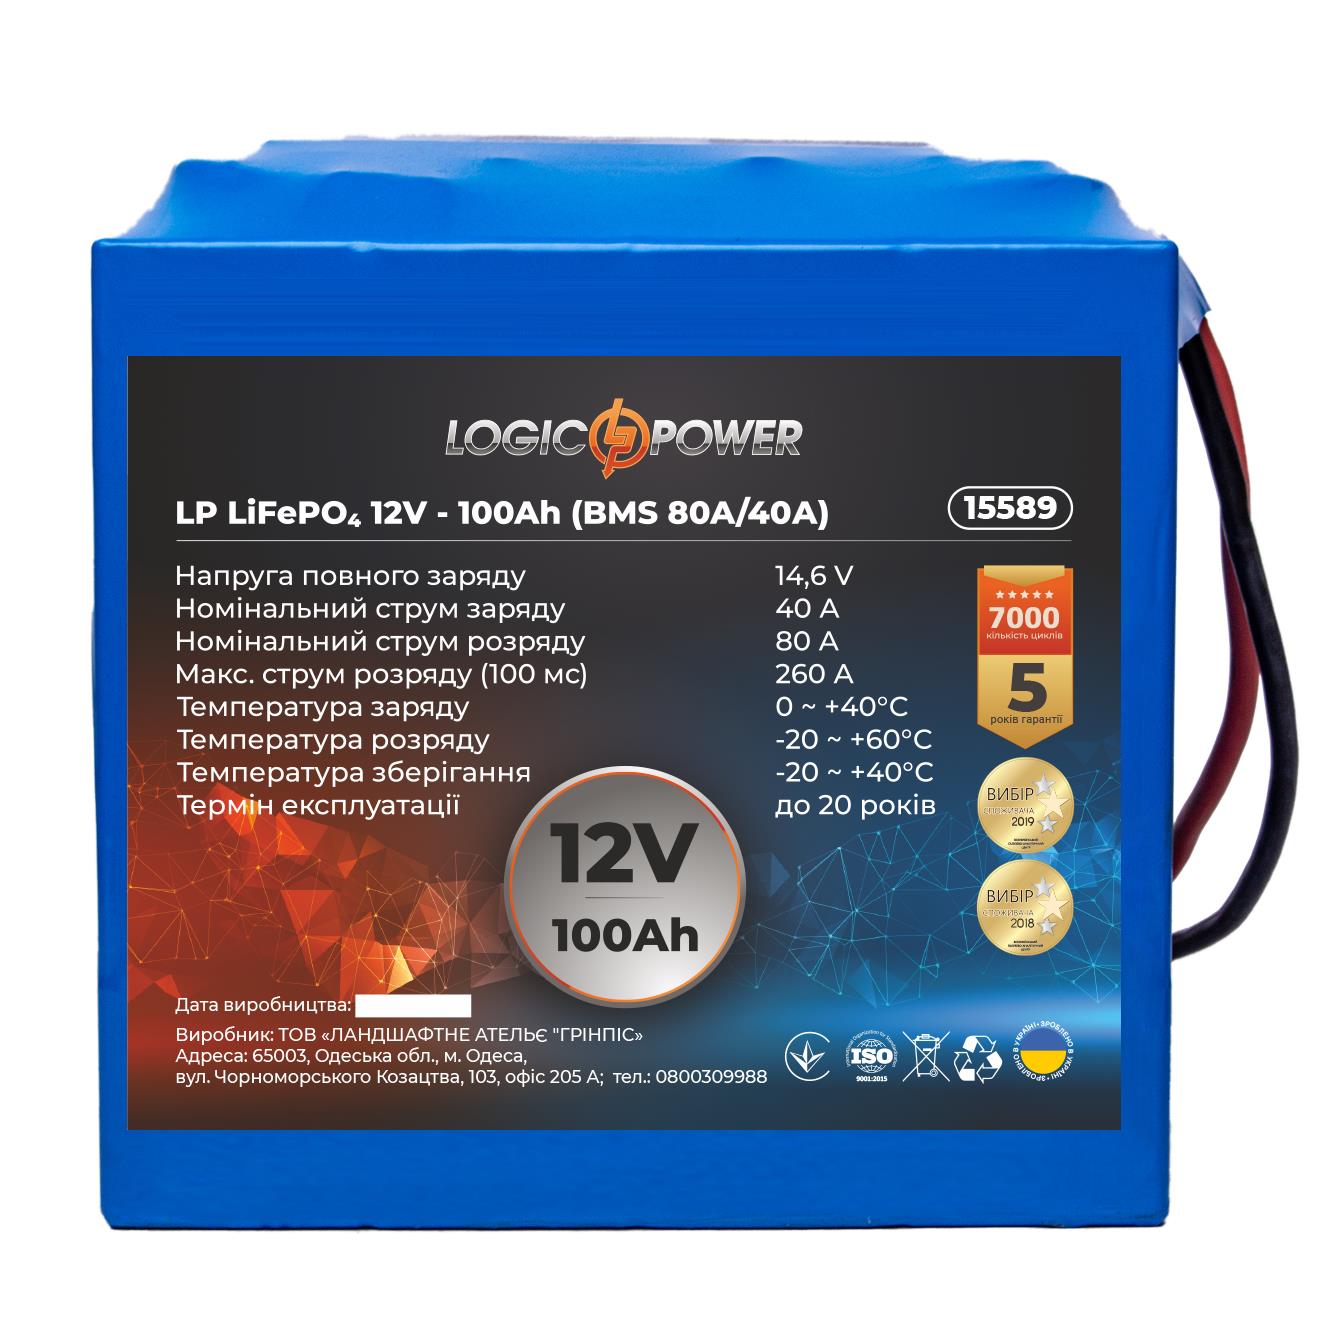 LogicPower LP LiFePO4 12V - 100 Ah (BMS 80А/40A) (15589)